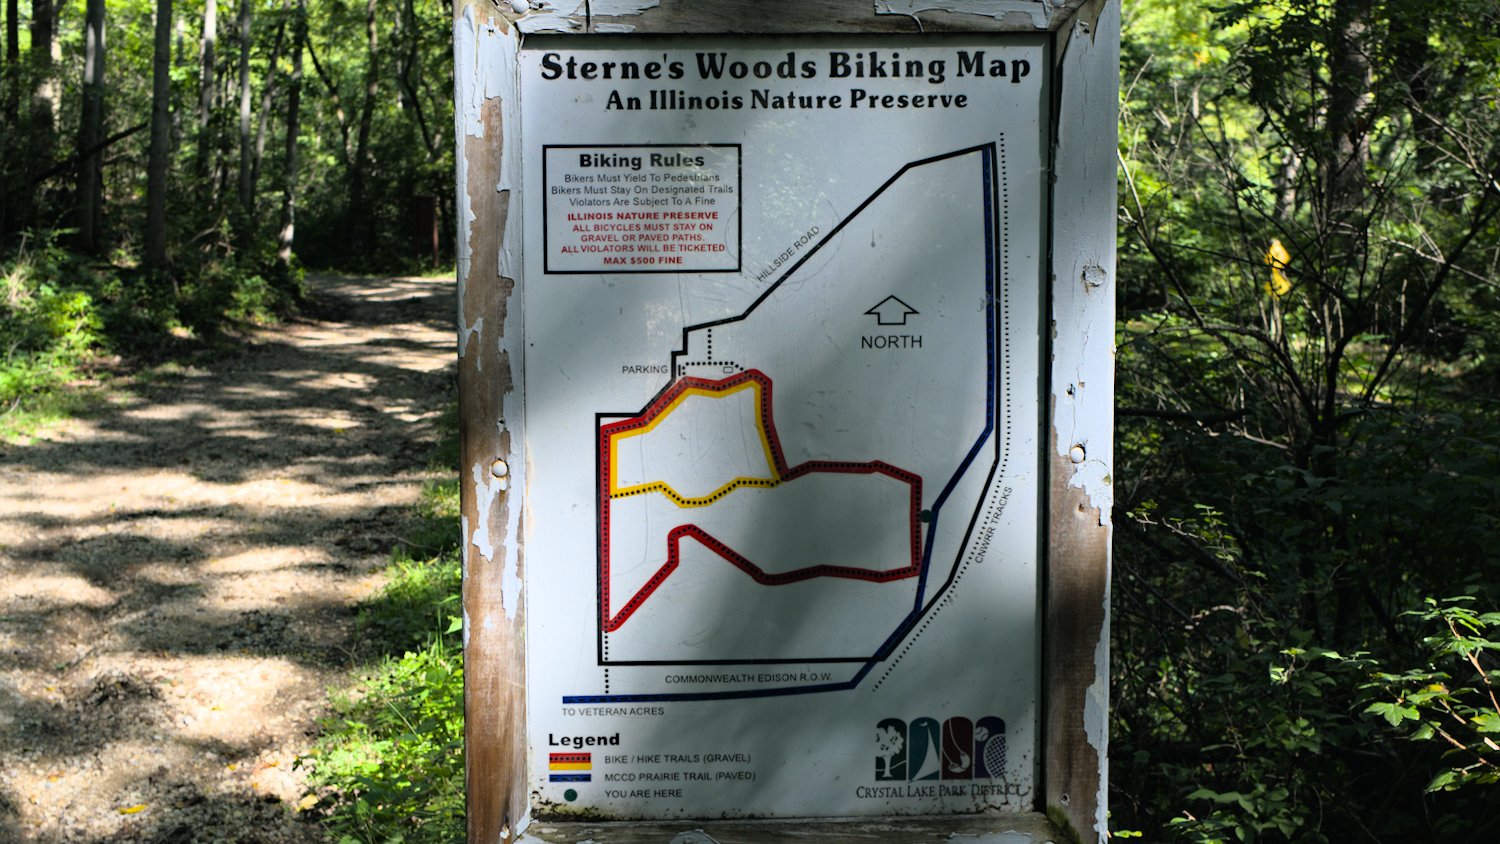 Sterne's Woods Biking Map sign.